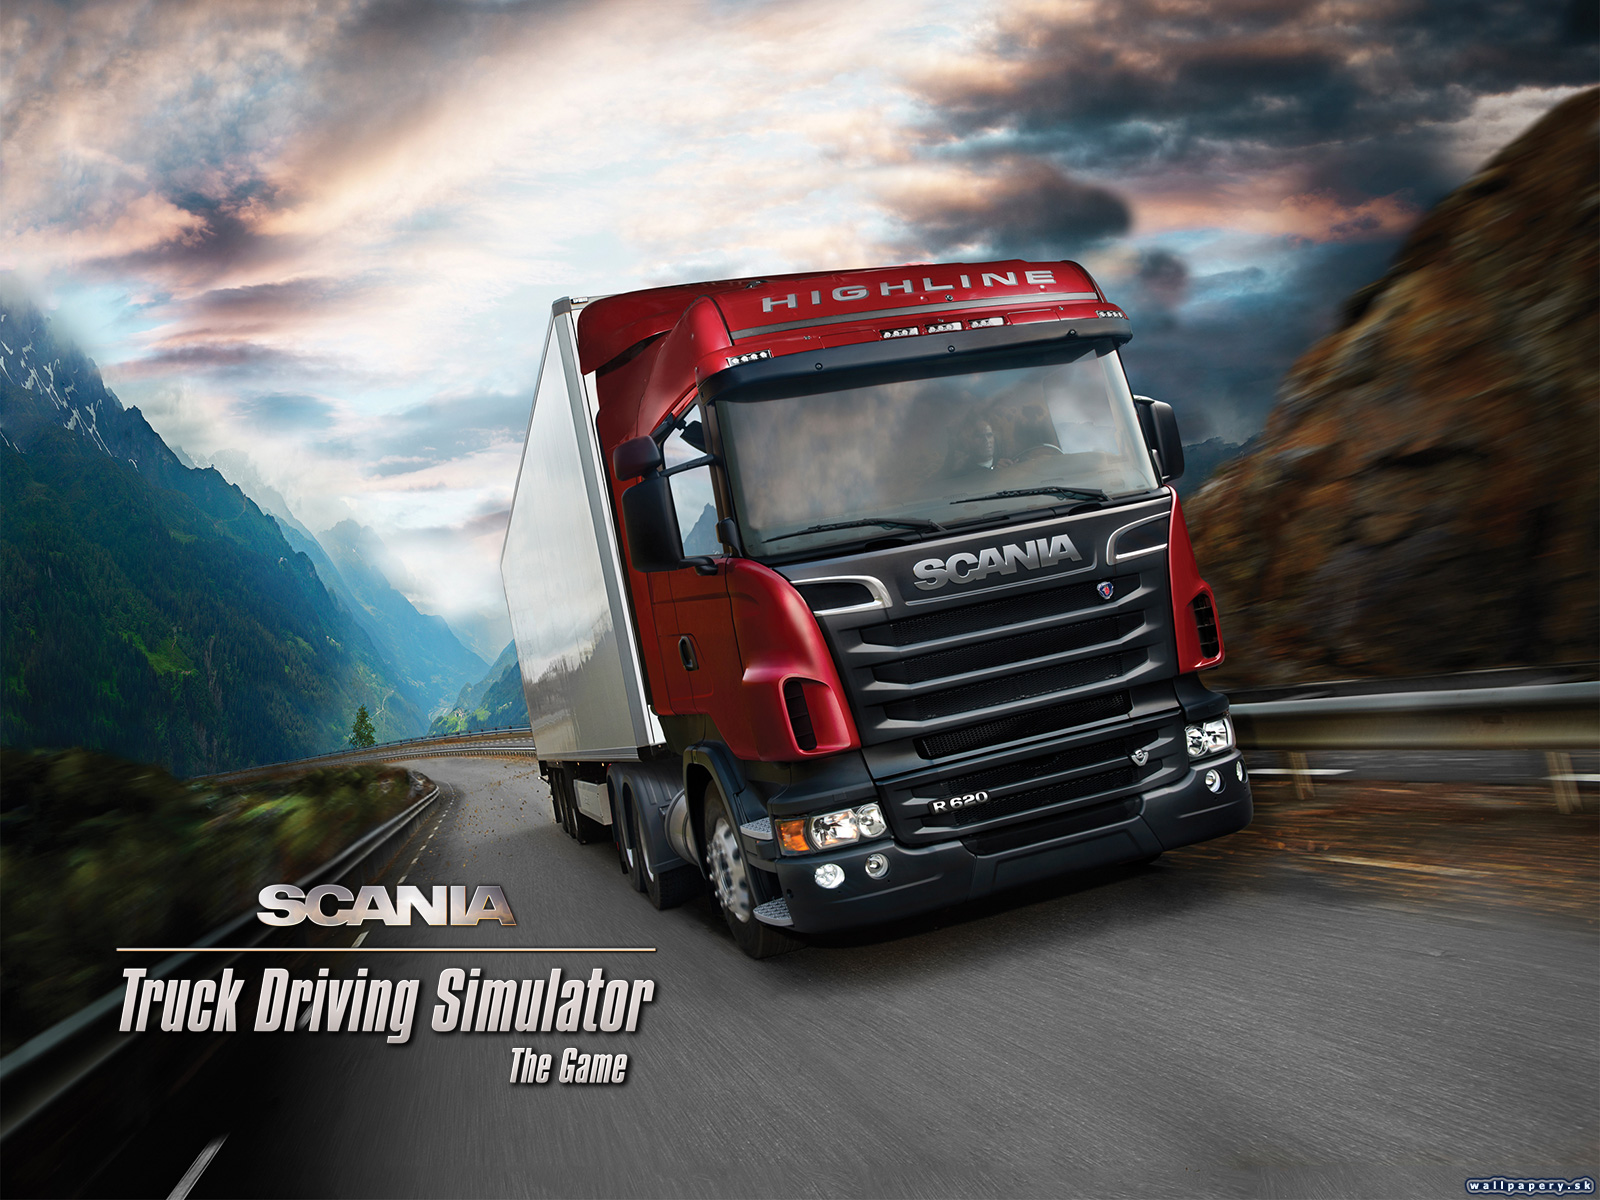 Scania Truck Driving Simulator - The Game - wallpaper 2